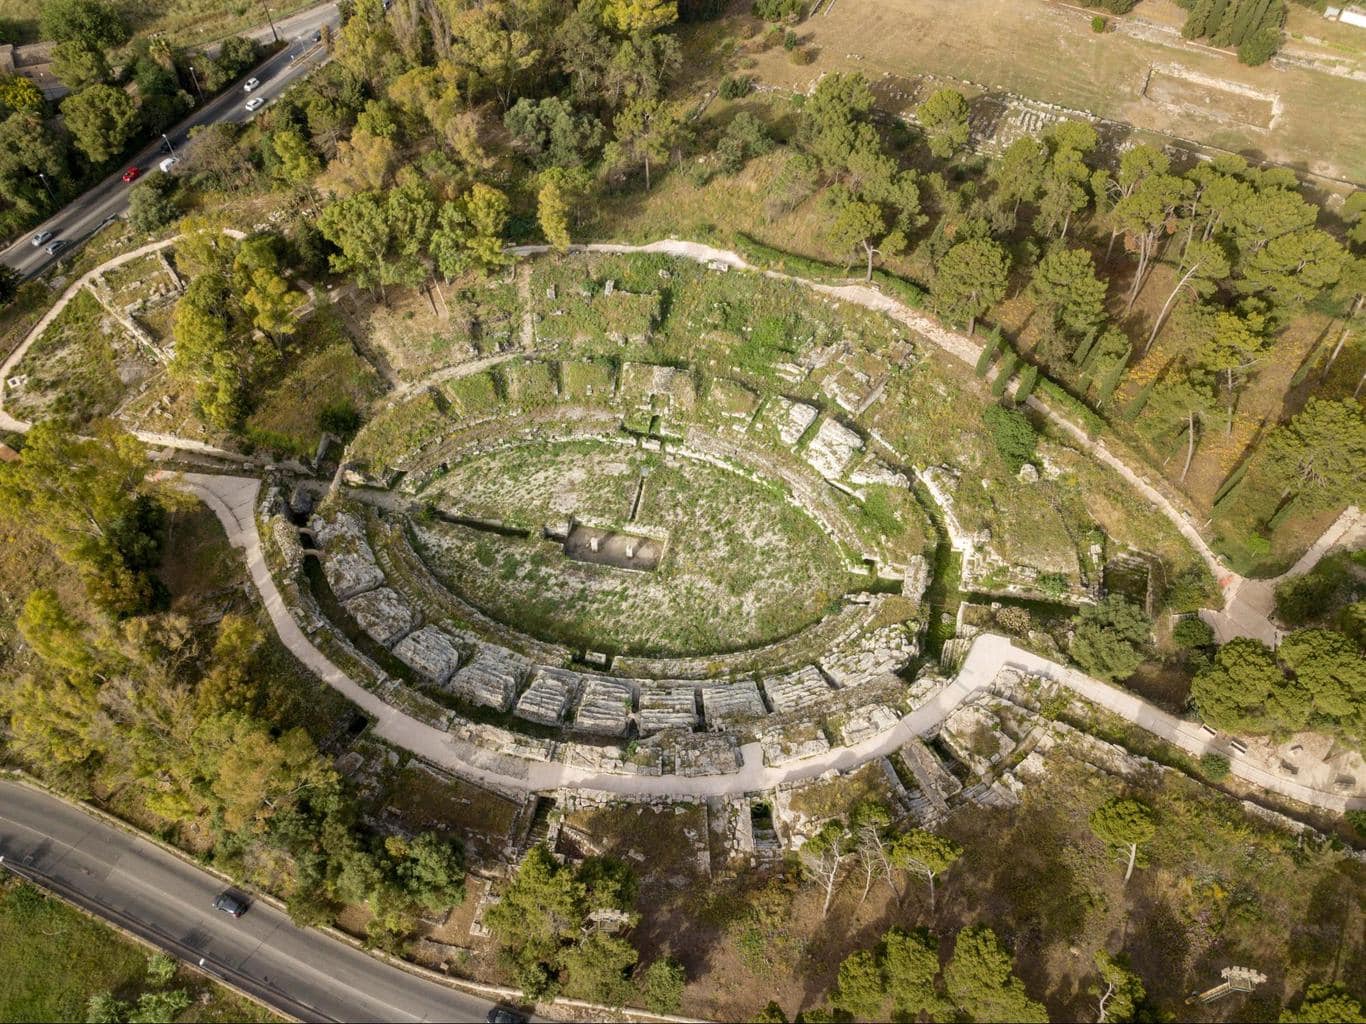 The Roman Amphitheatre of Syracuse